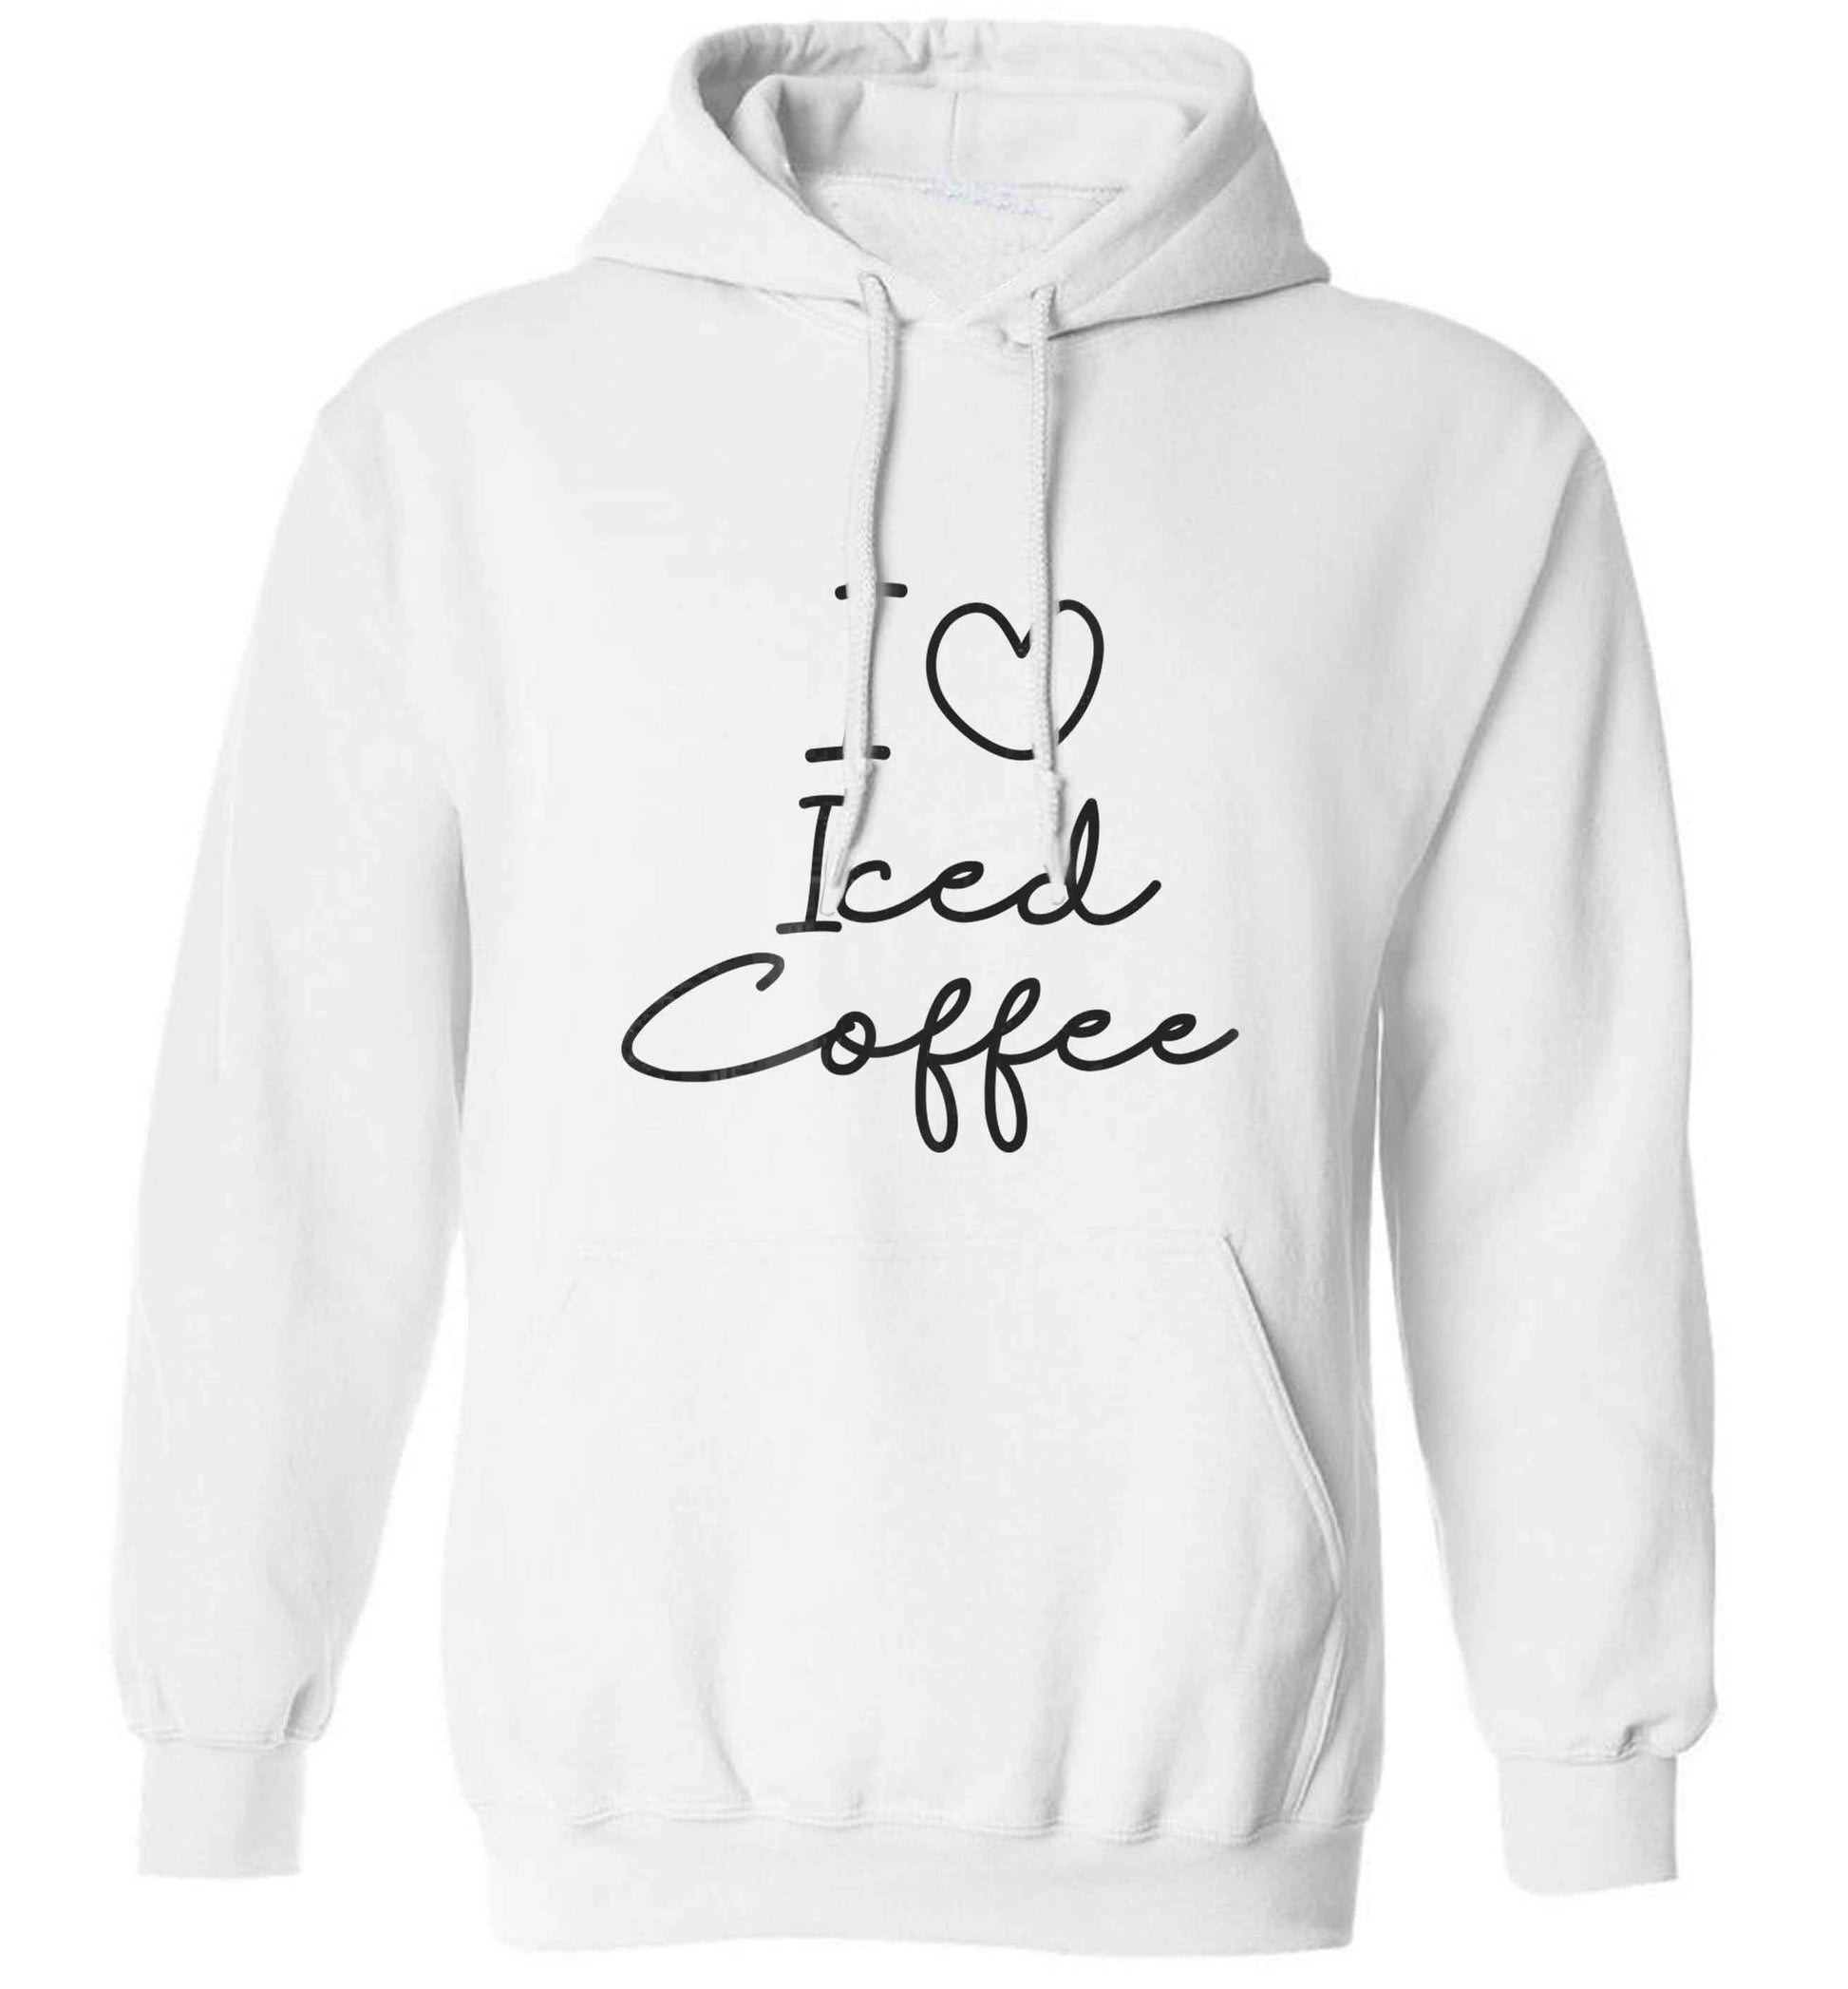 I love iced coffee adults unisex white hoodie 2XL